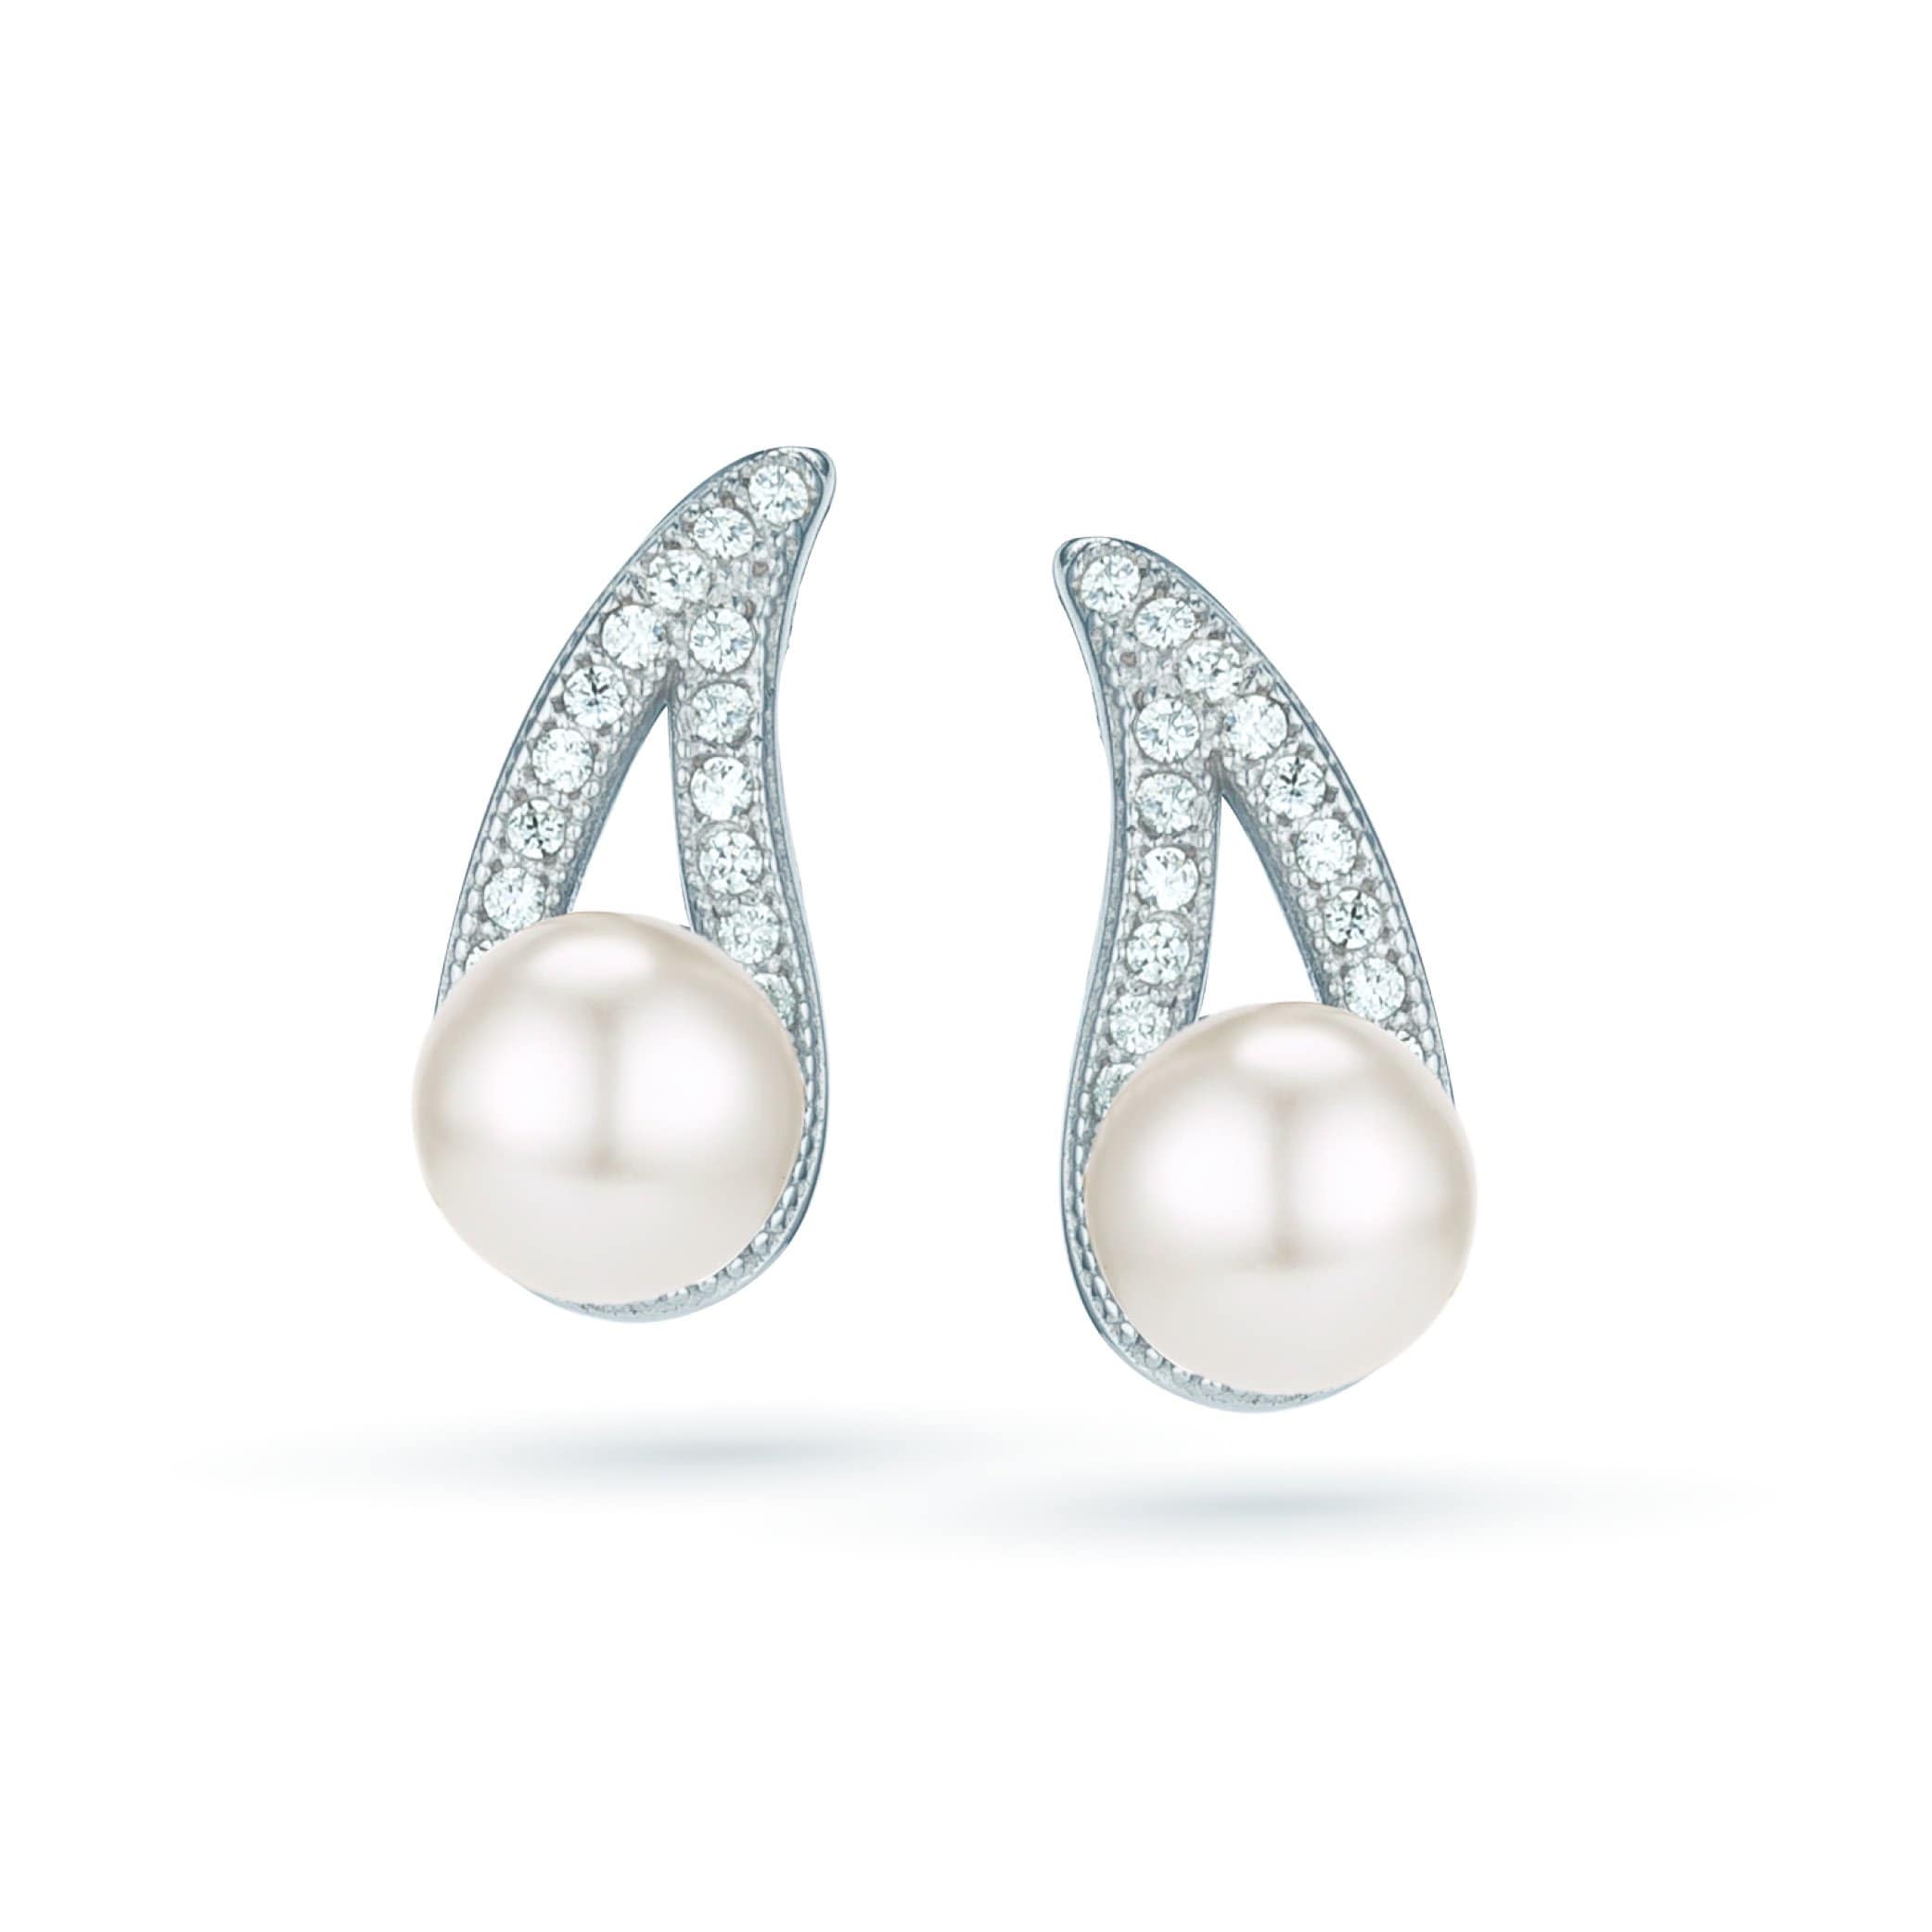 Lynora Jewellery Earring Sterling Silver / Pearl Sterling Silver and Pearl Stud Earrings